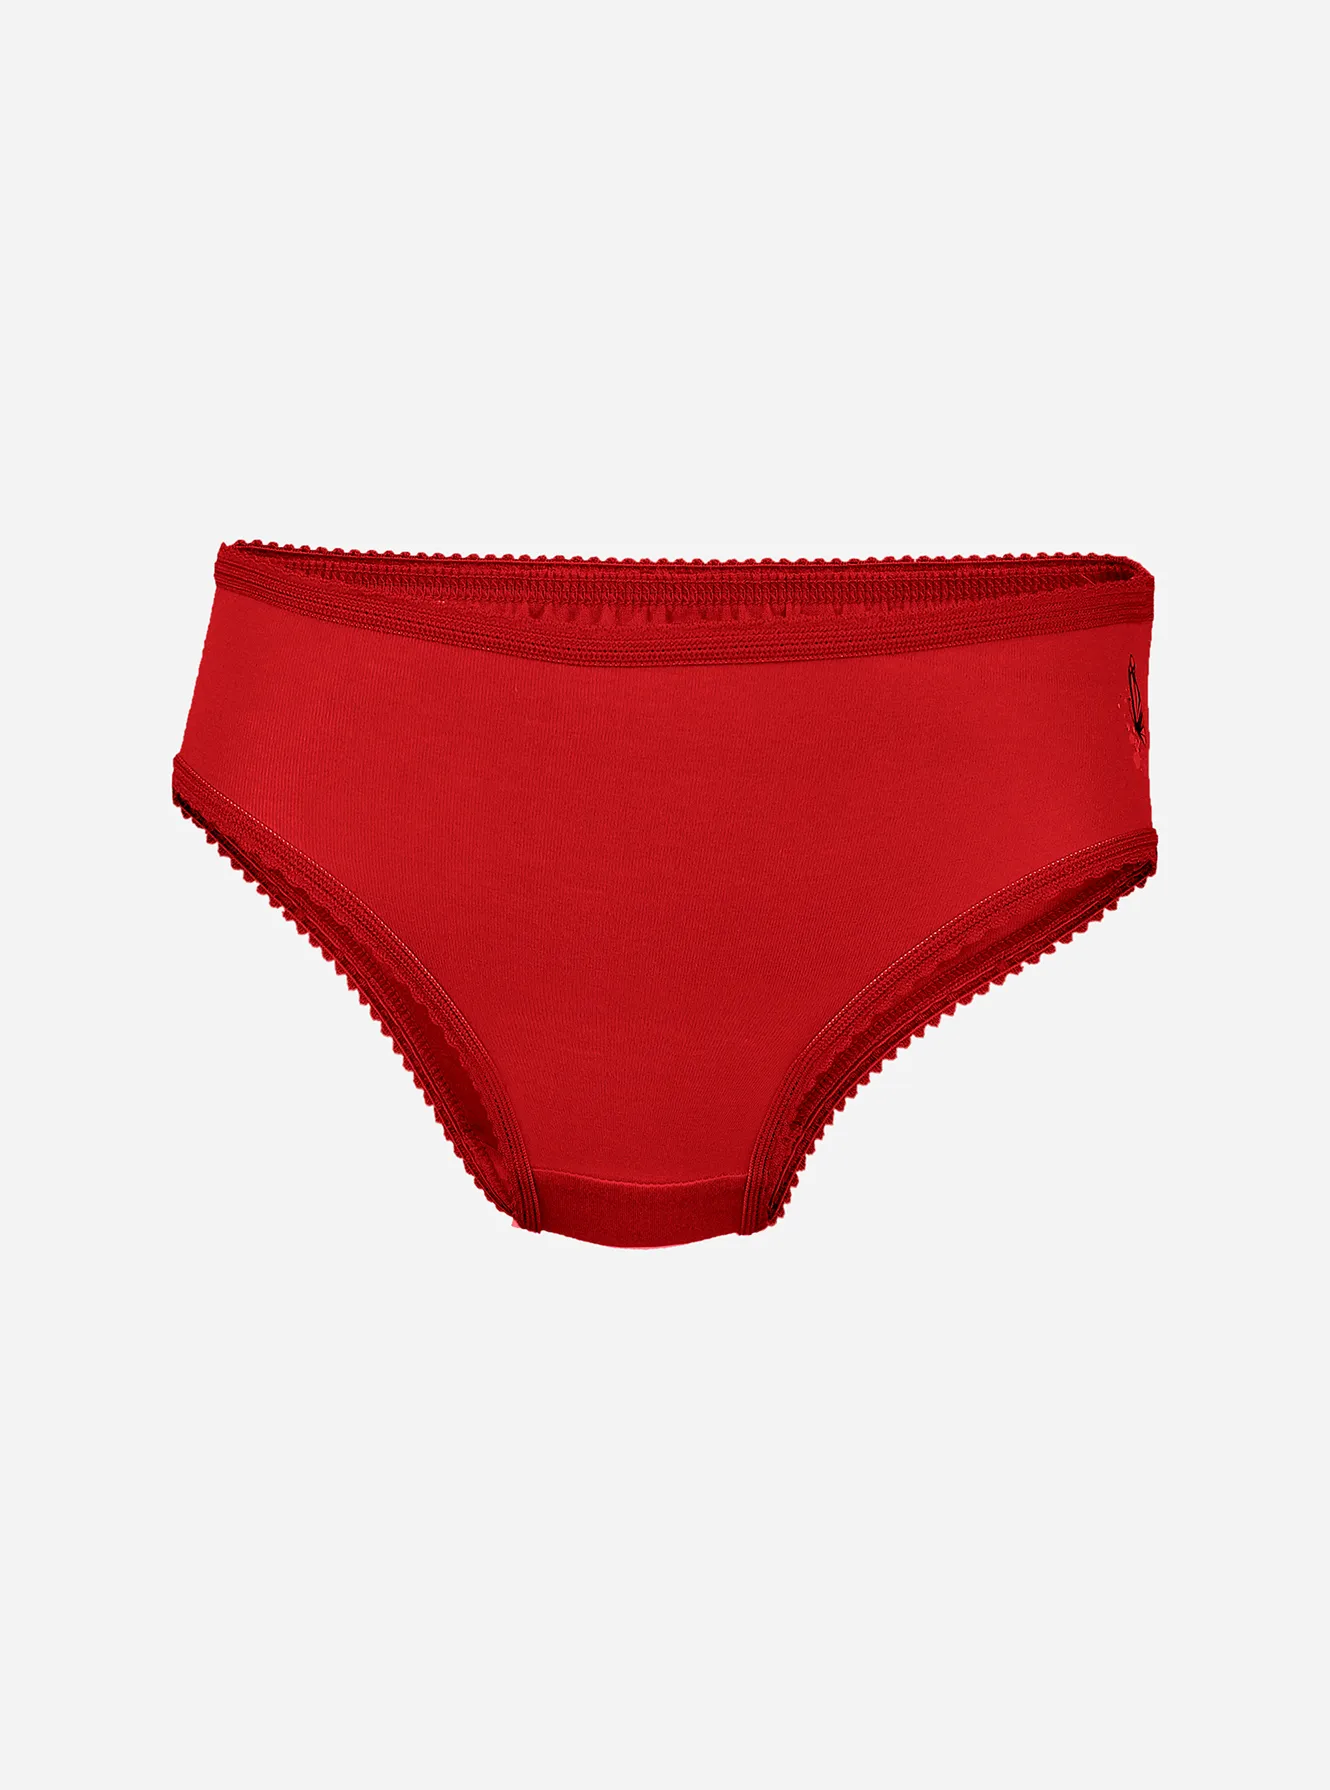 Premium cotton inner elastic panty- Pack of 3, Buy Mens & Kids Innerwear